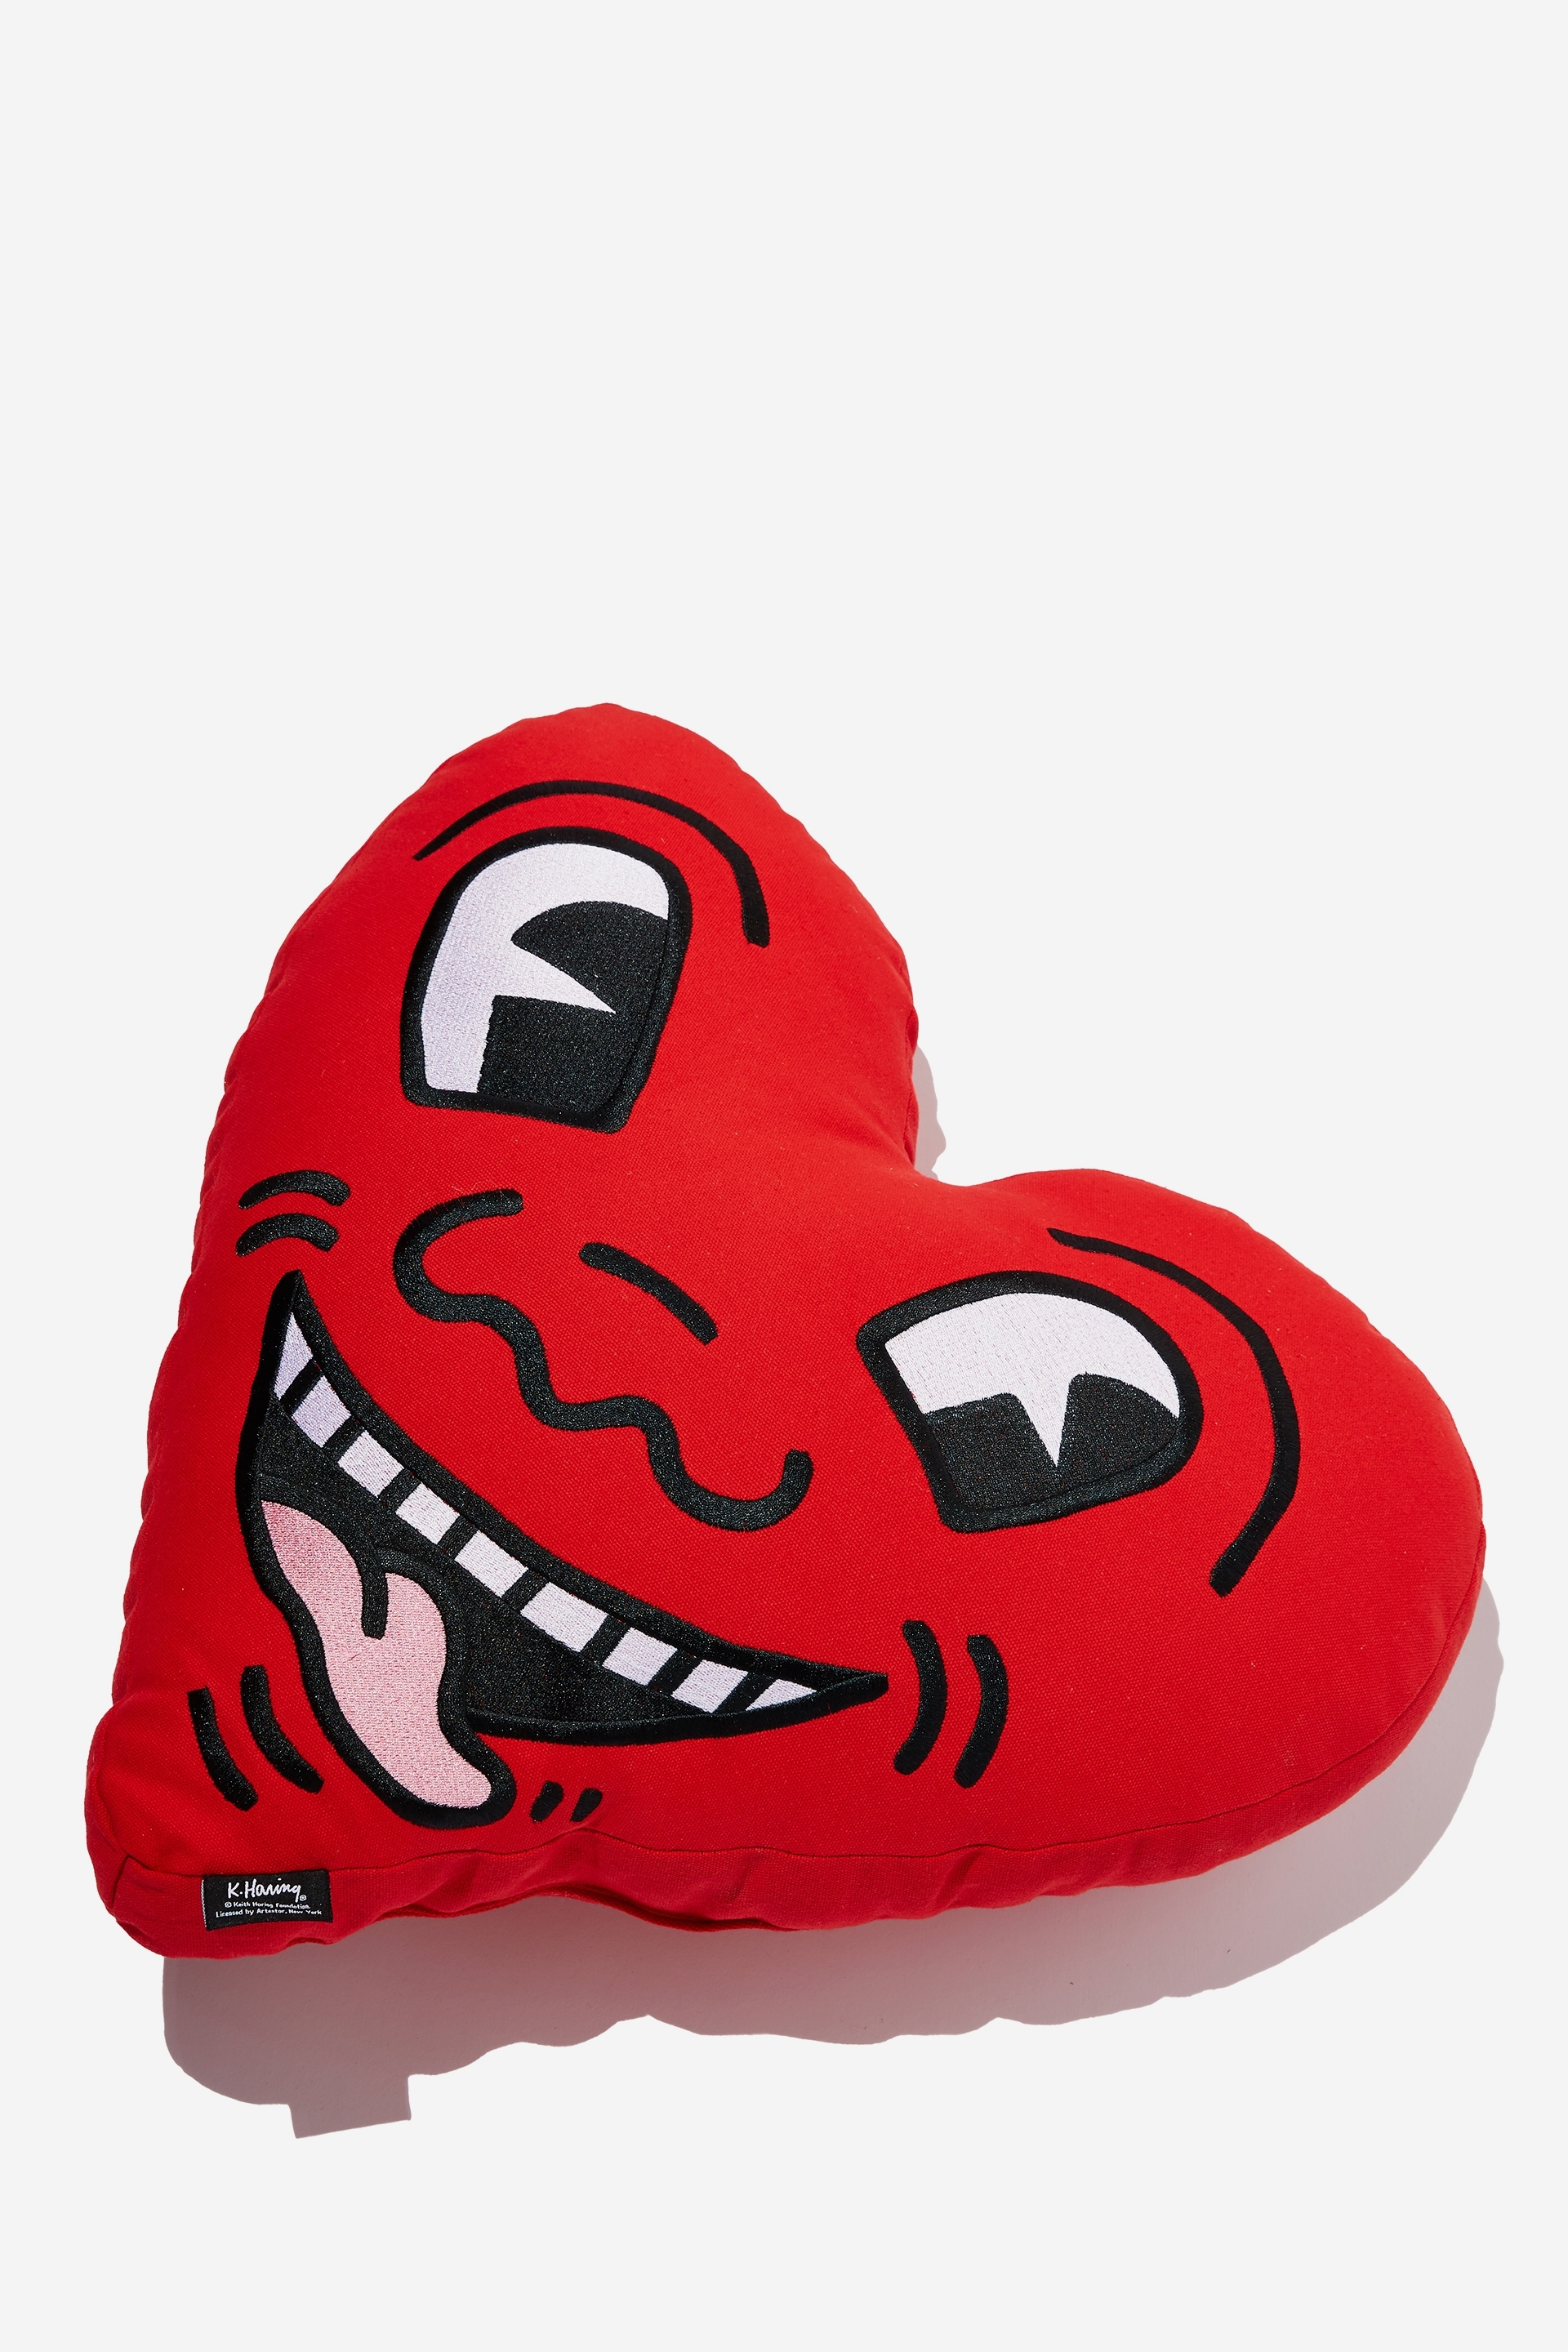 Typo - Keith Haring Get Cushy Cushion - Lcn kei keith haring red heart